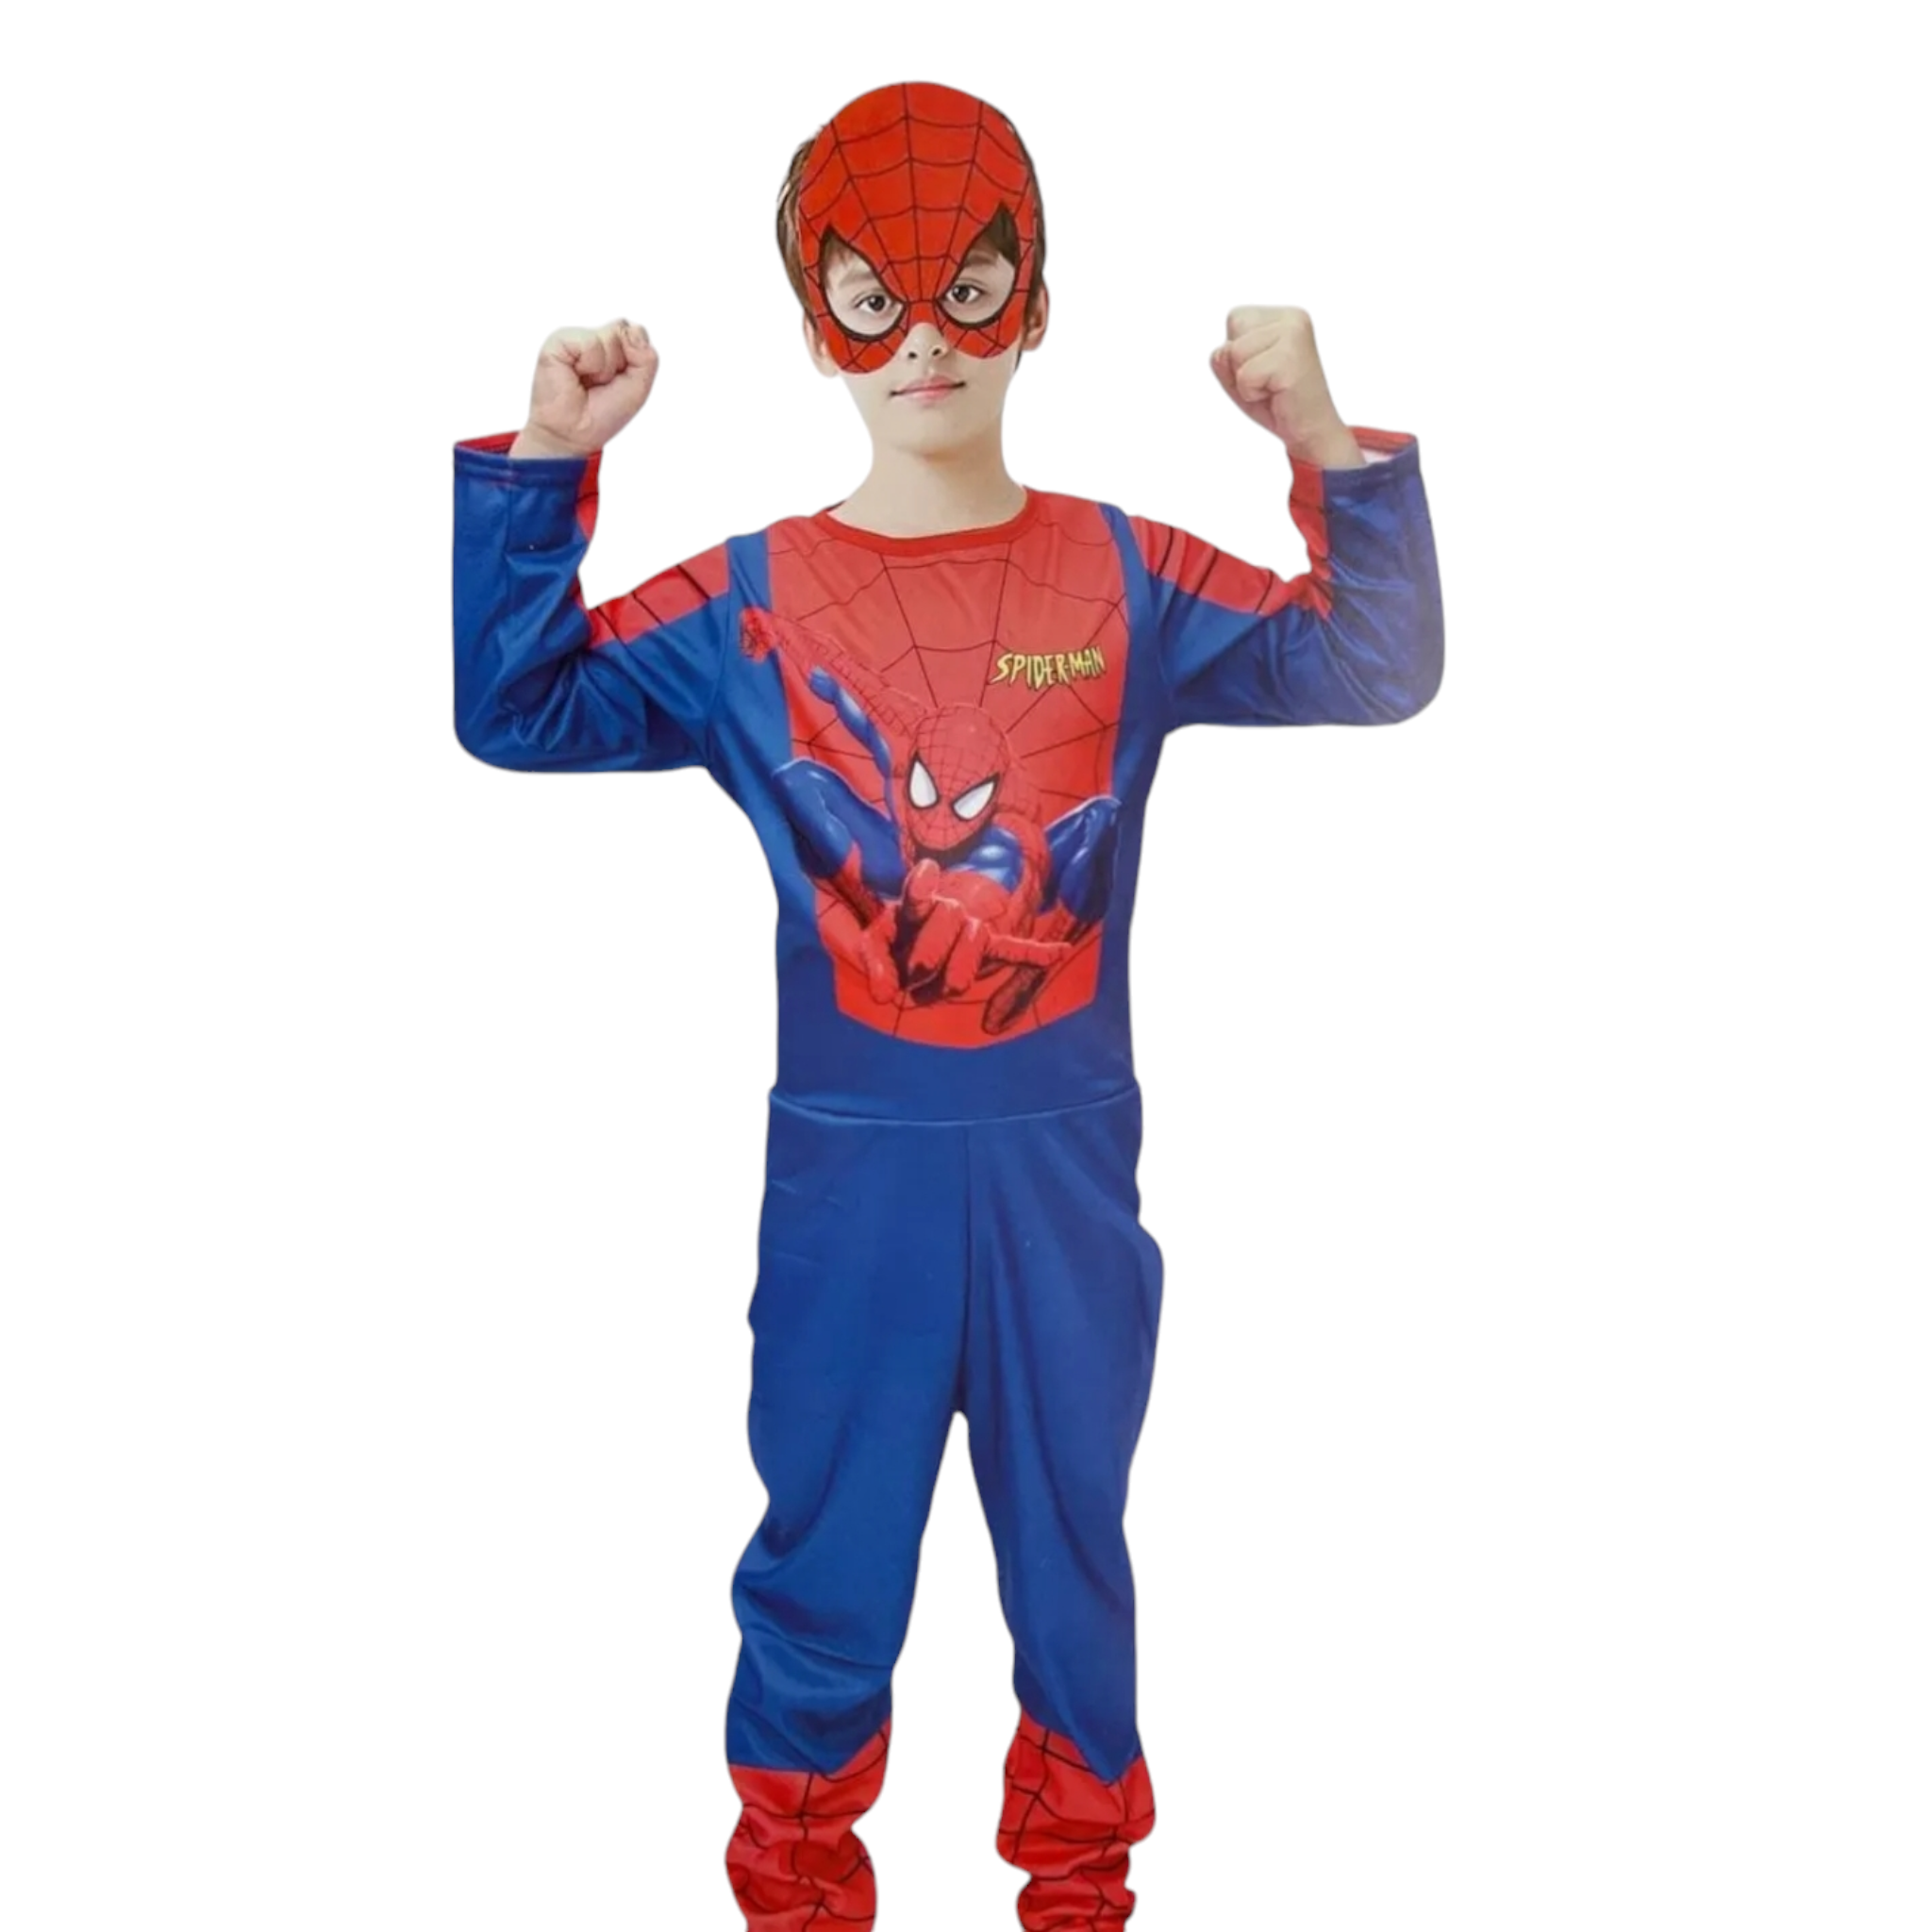 Disney Spiderman Party Kids Costume